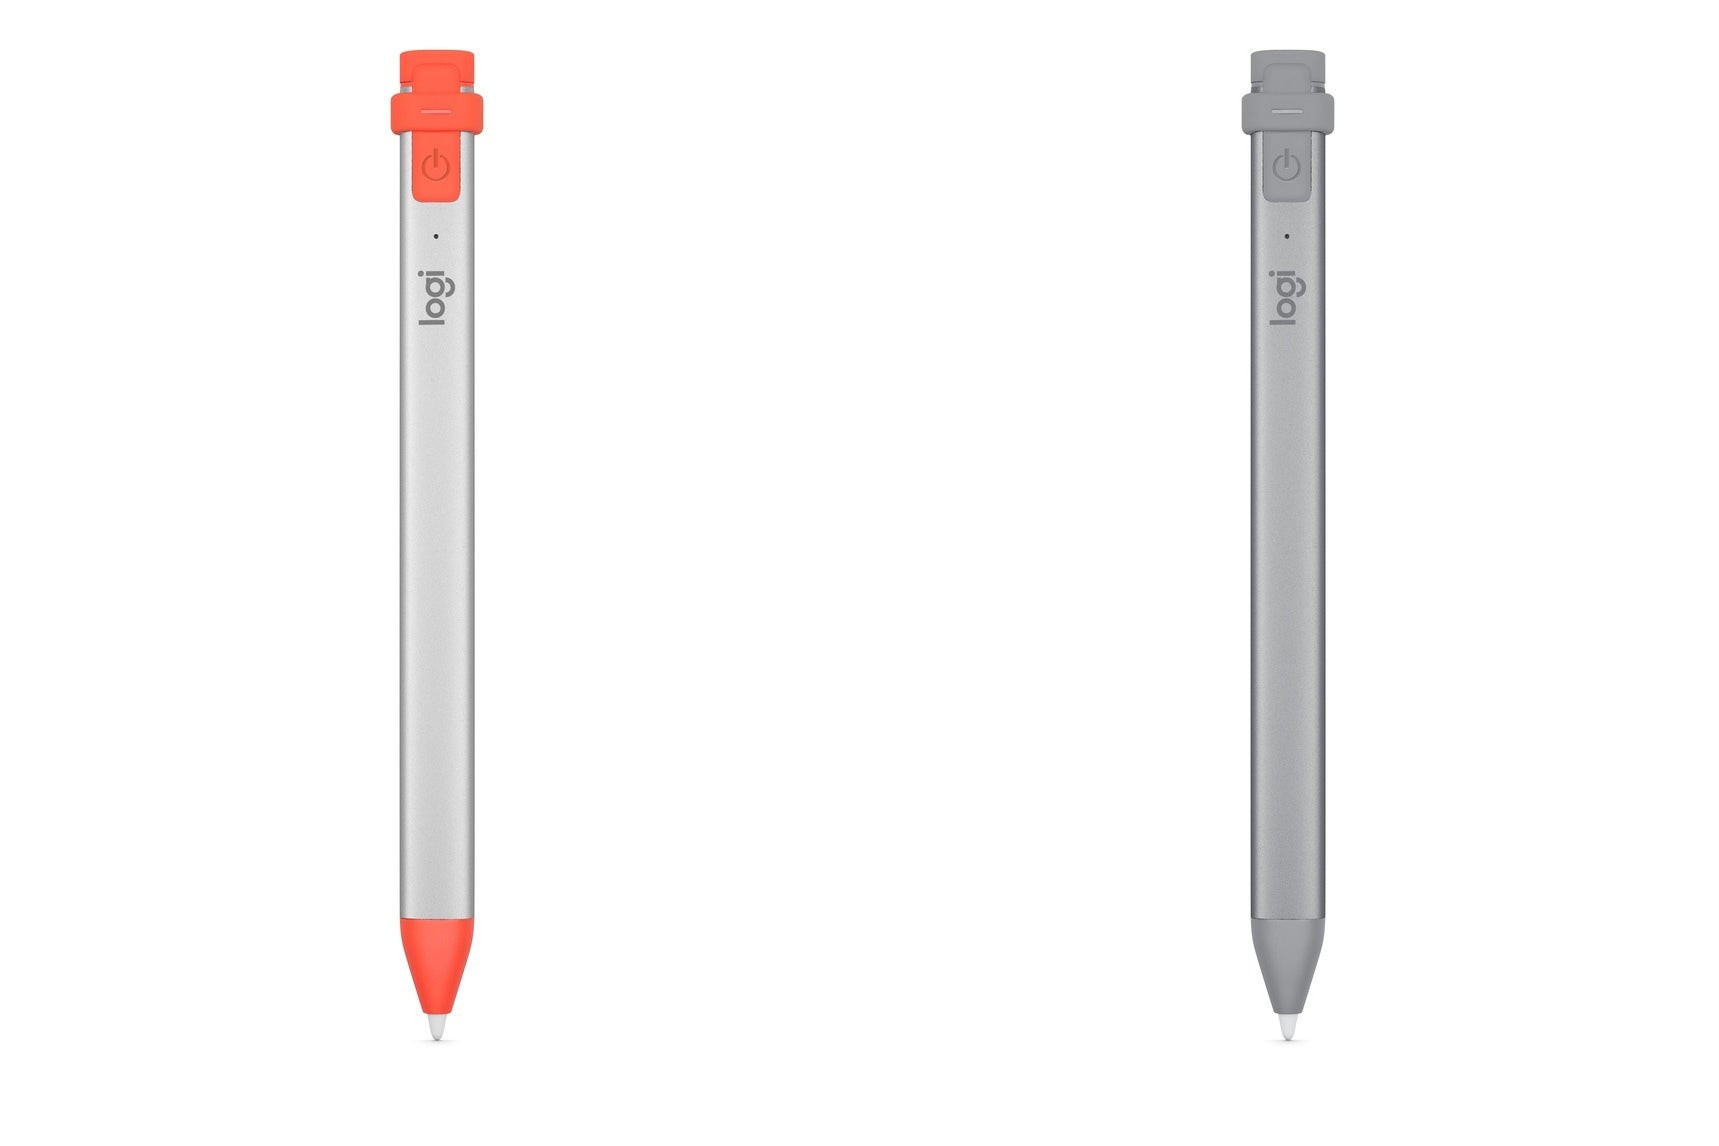 Best cheap Apple Pencil alternatives: iPad stylus on a budget